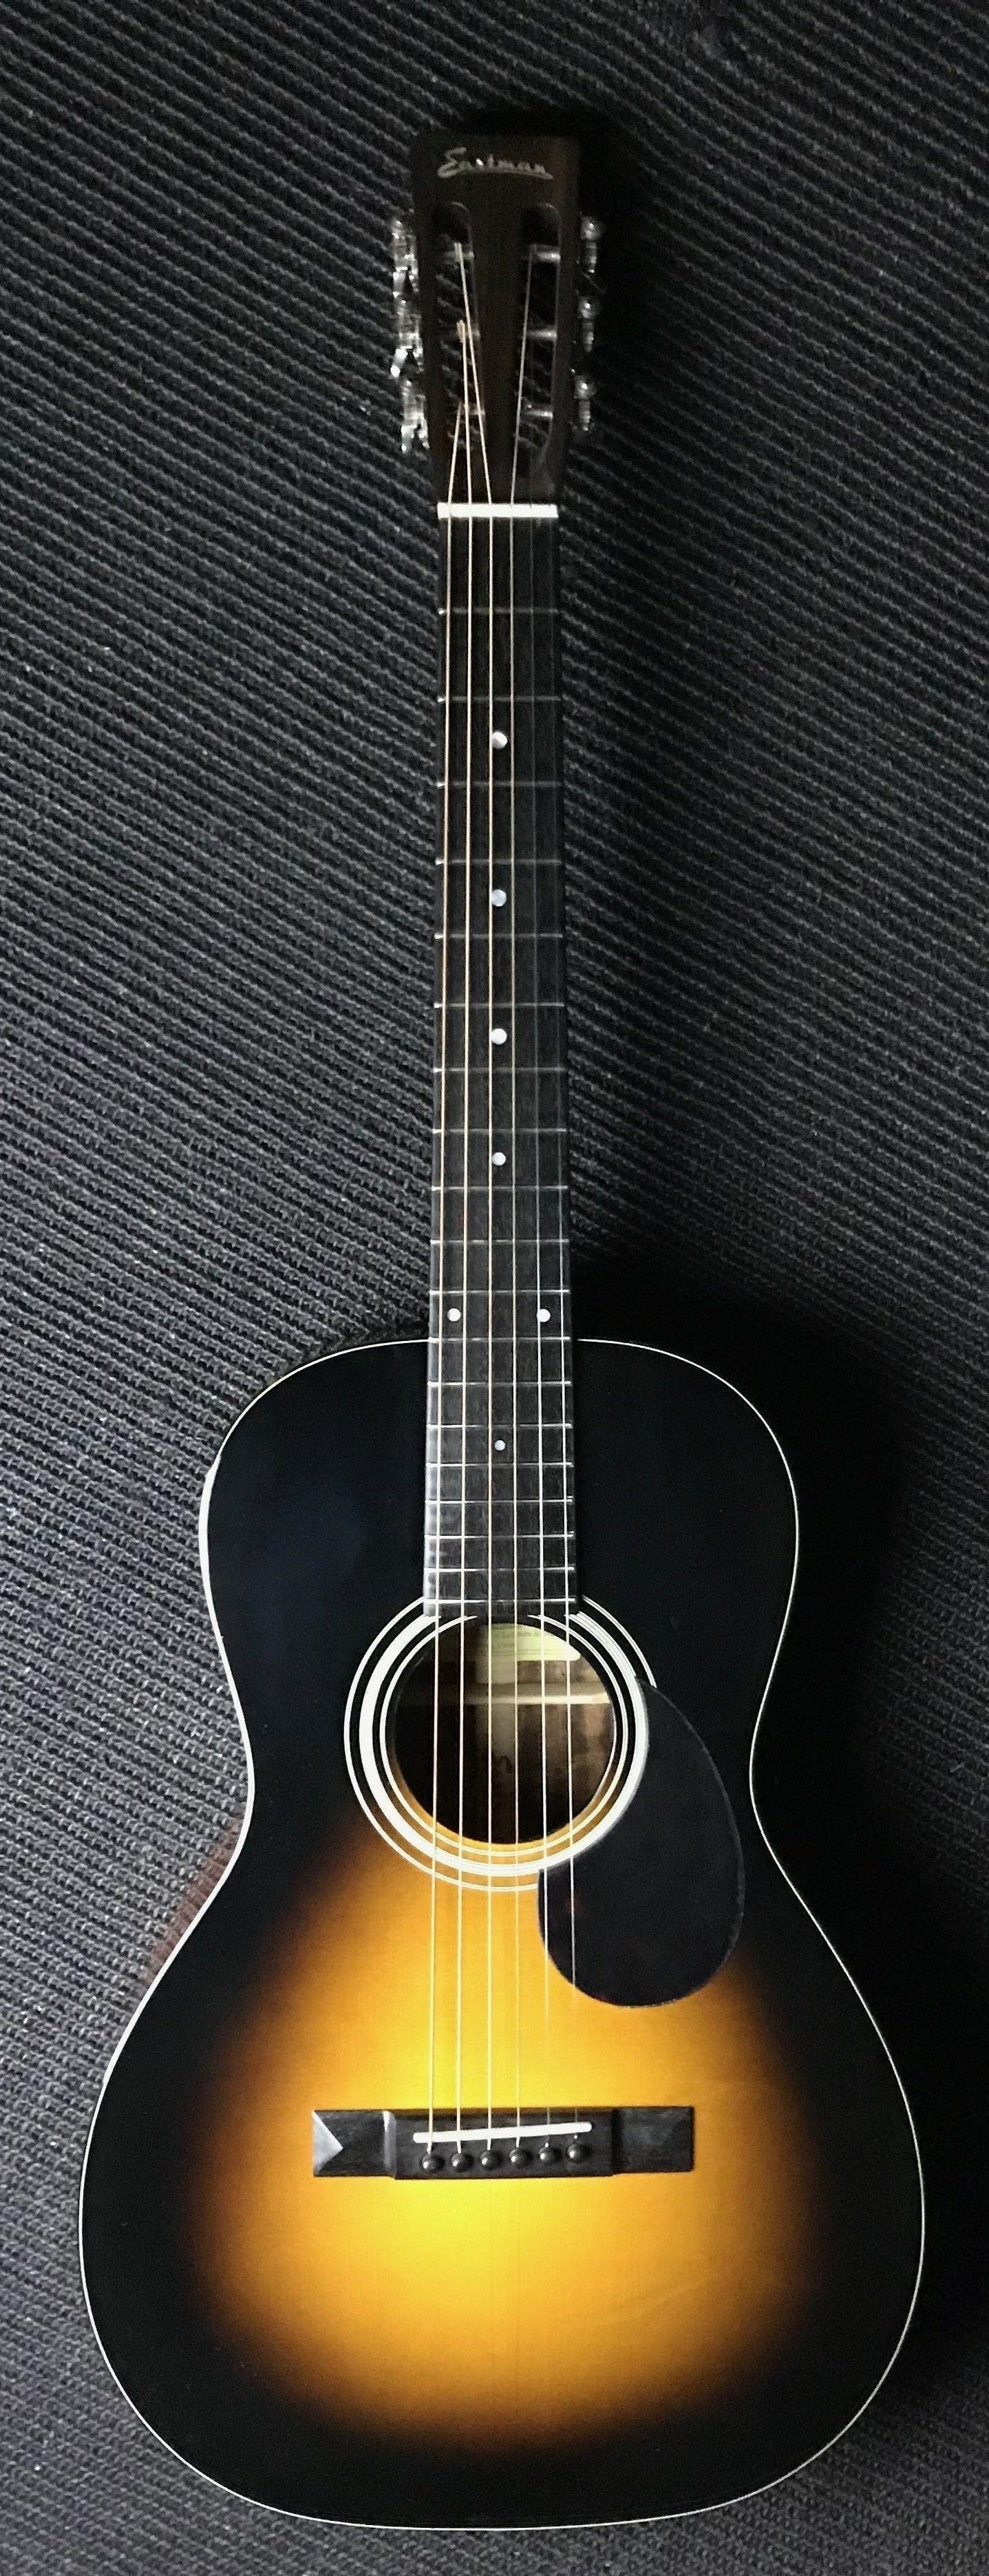 Eastman E10 P Sunburst, Acoustic Guitar for sale at Richards Guitars.